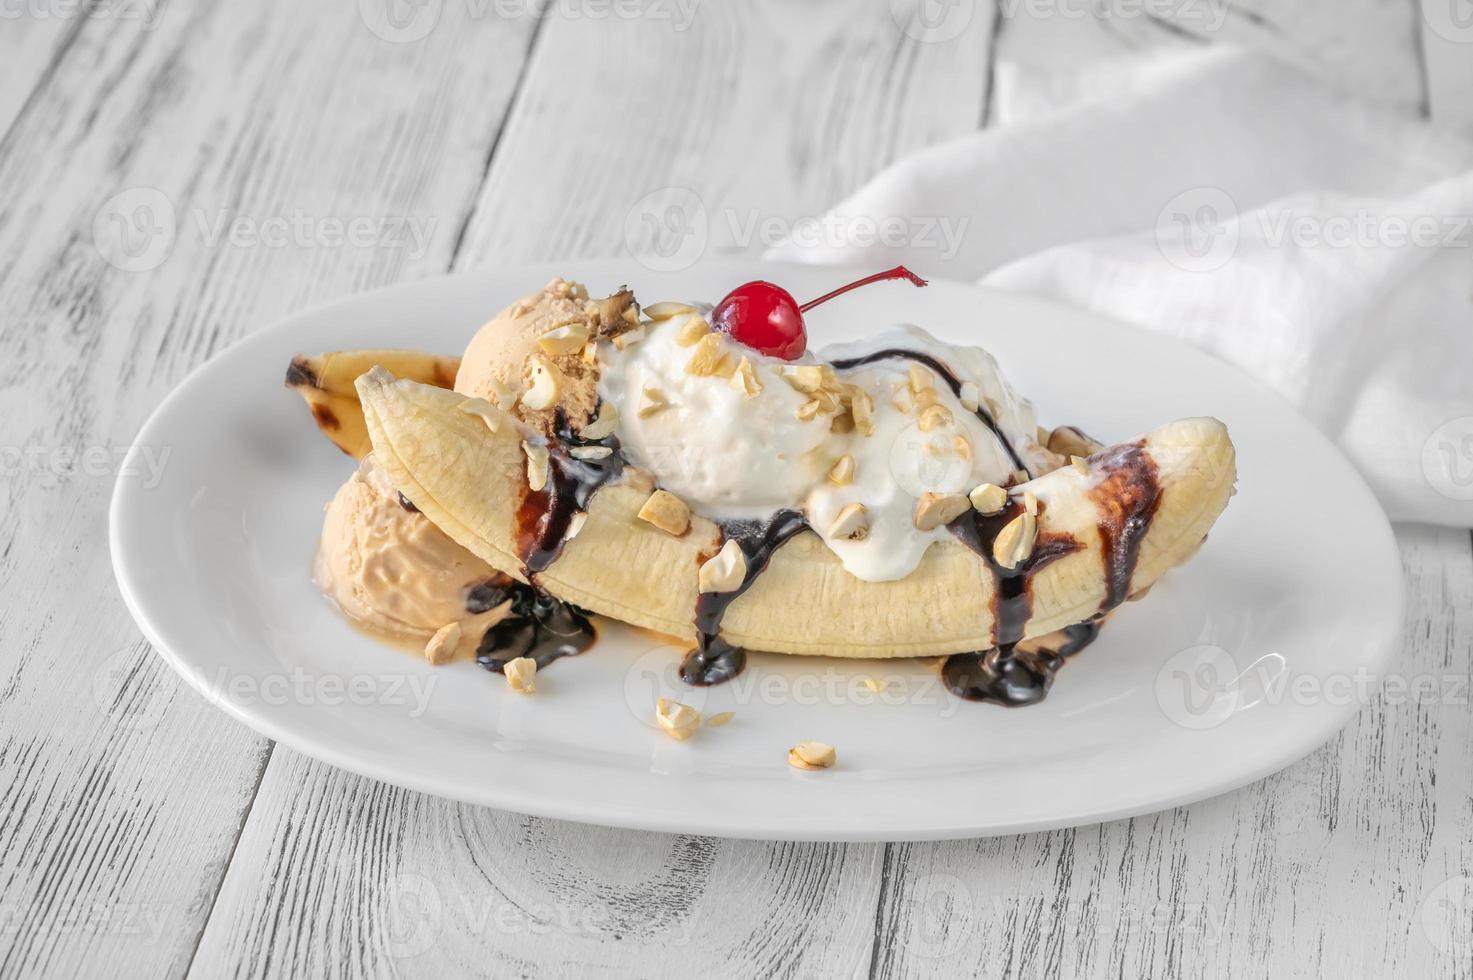 Banana split - American ice-cream based dessert photo